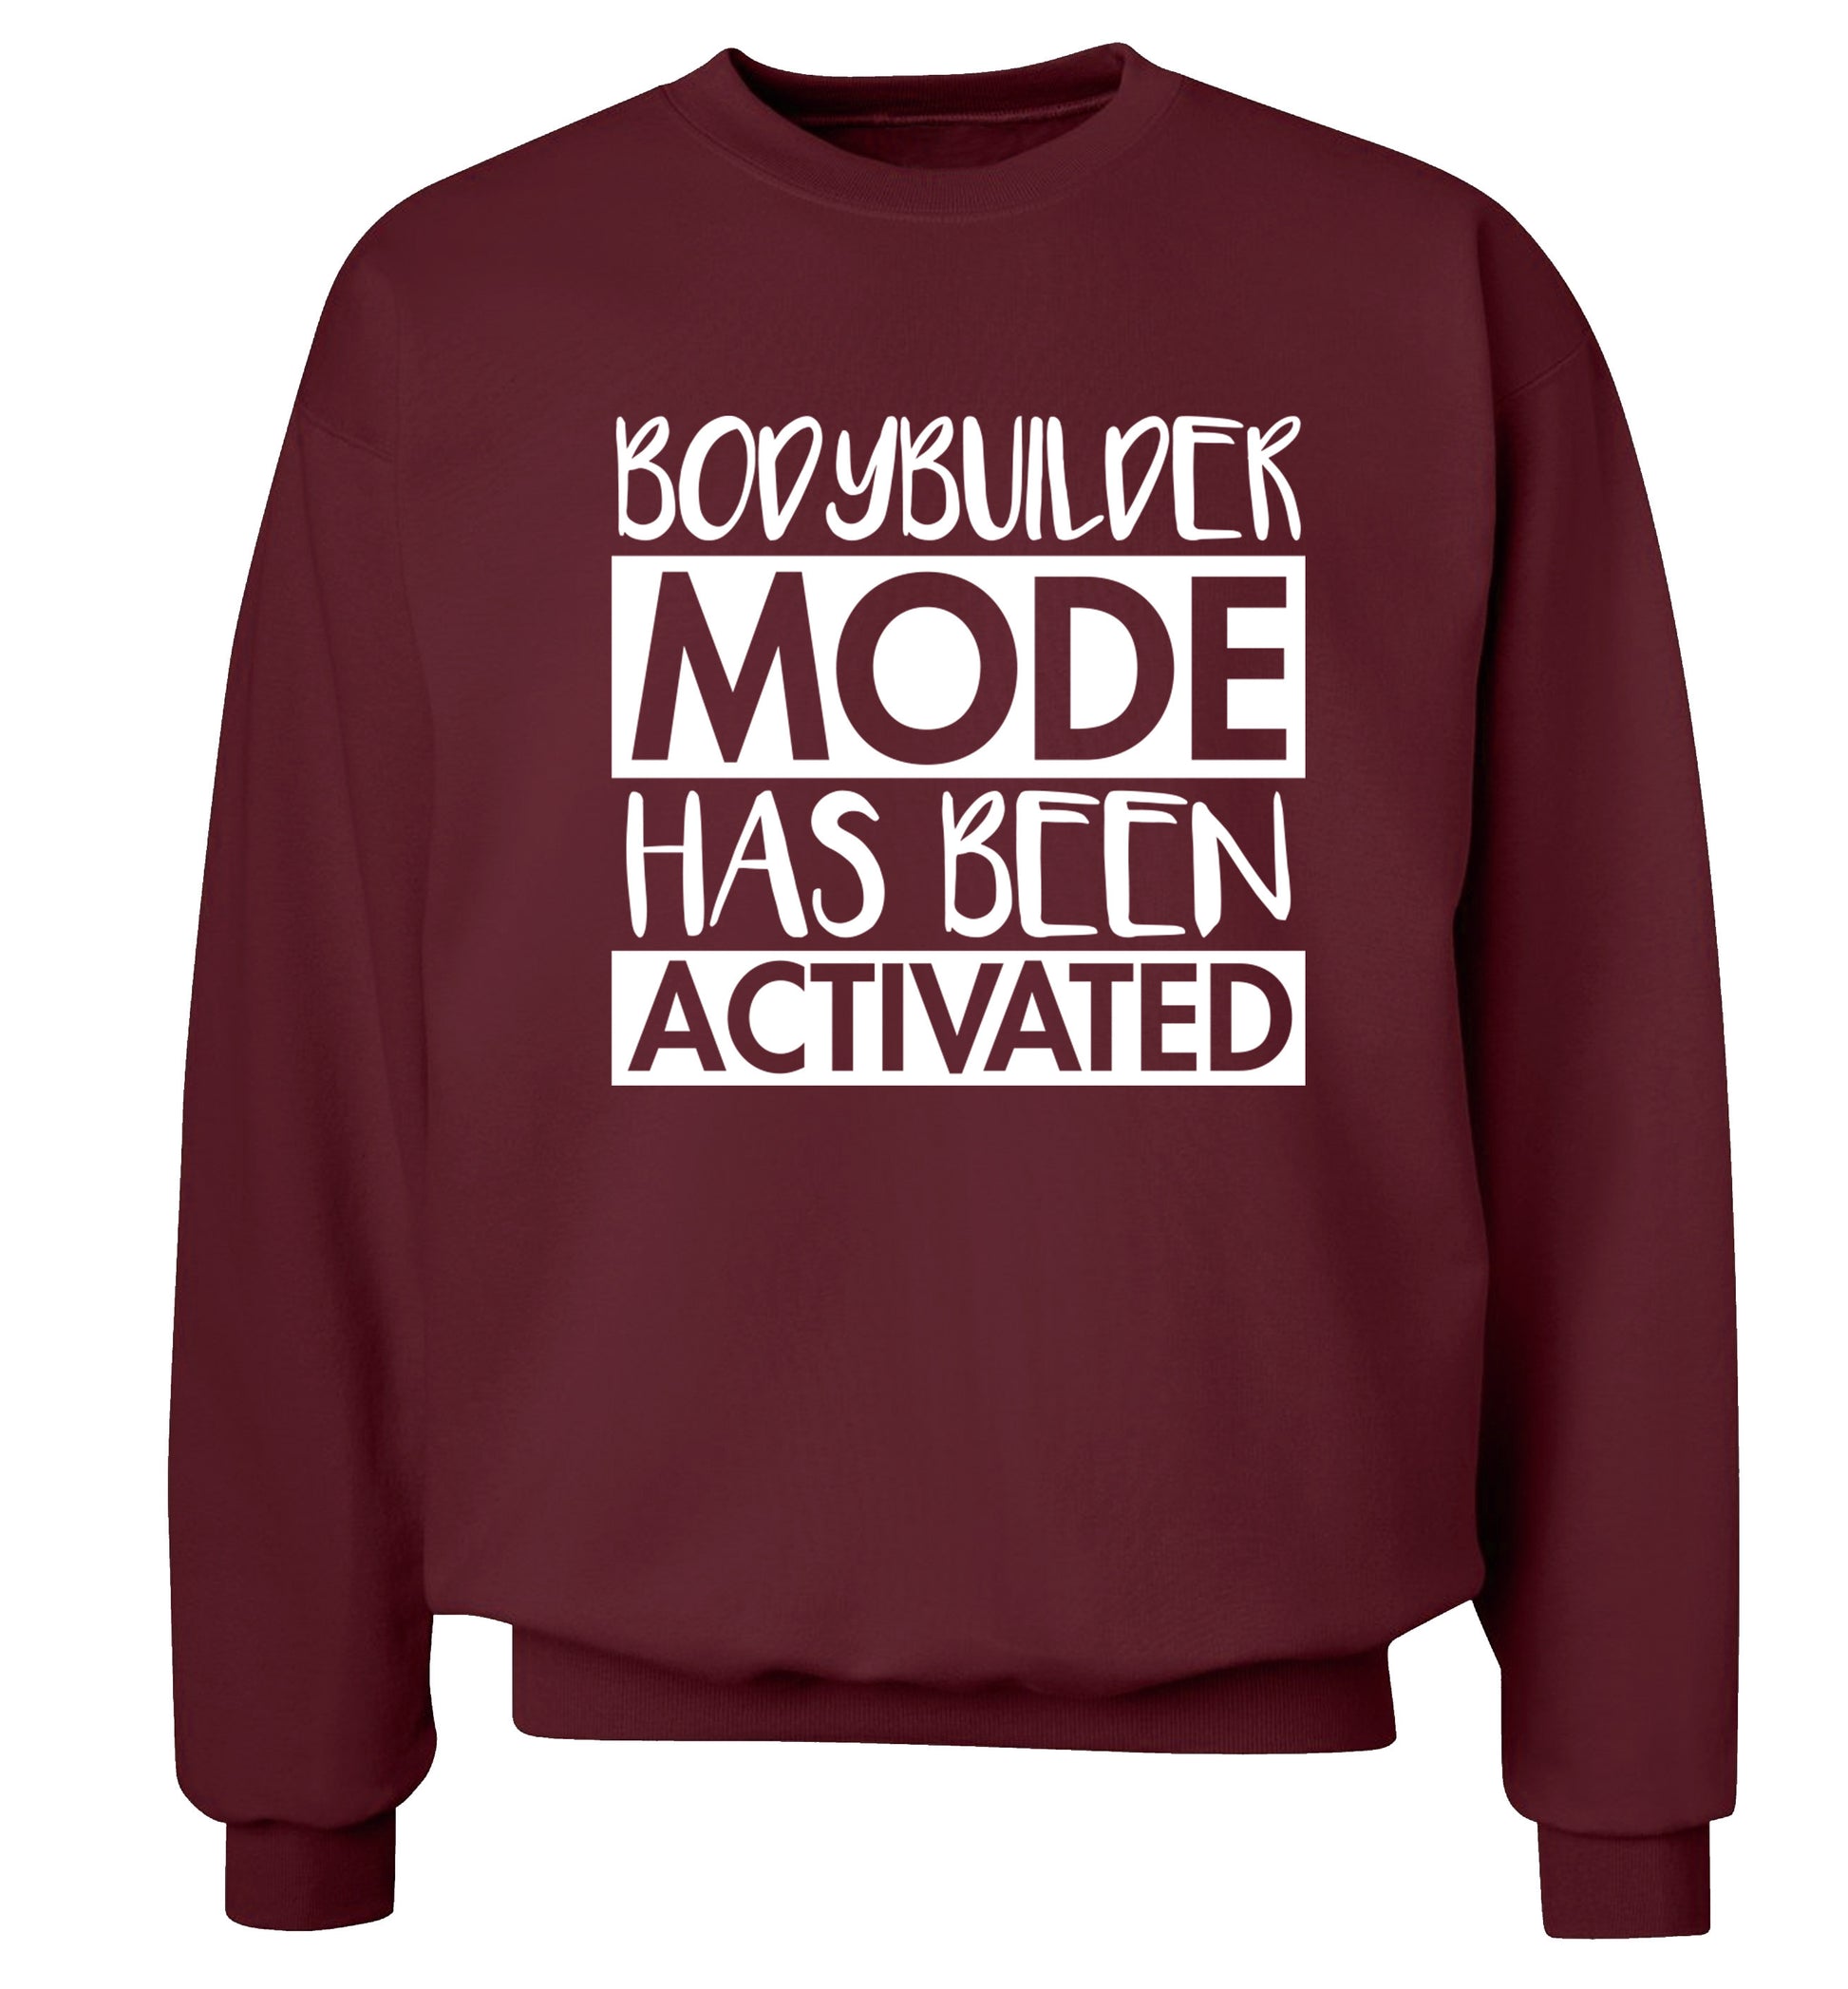 Bodybuilder mode activated Adult's unisex maroon Sweater 2XL